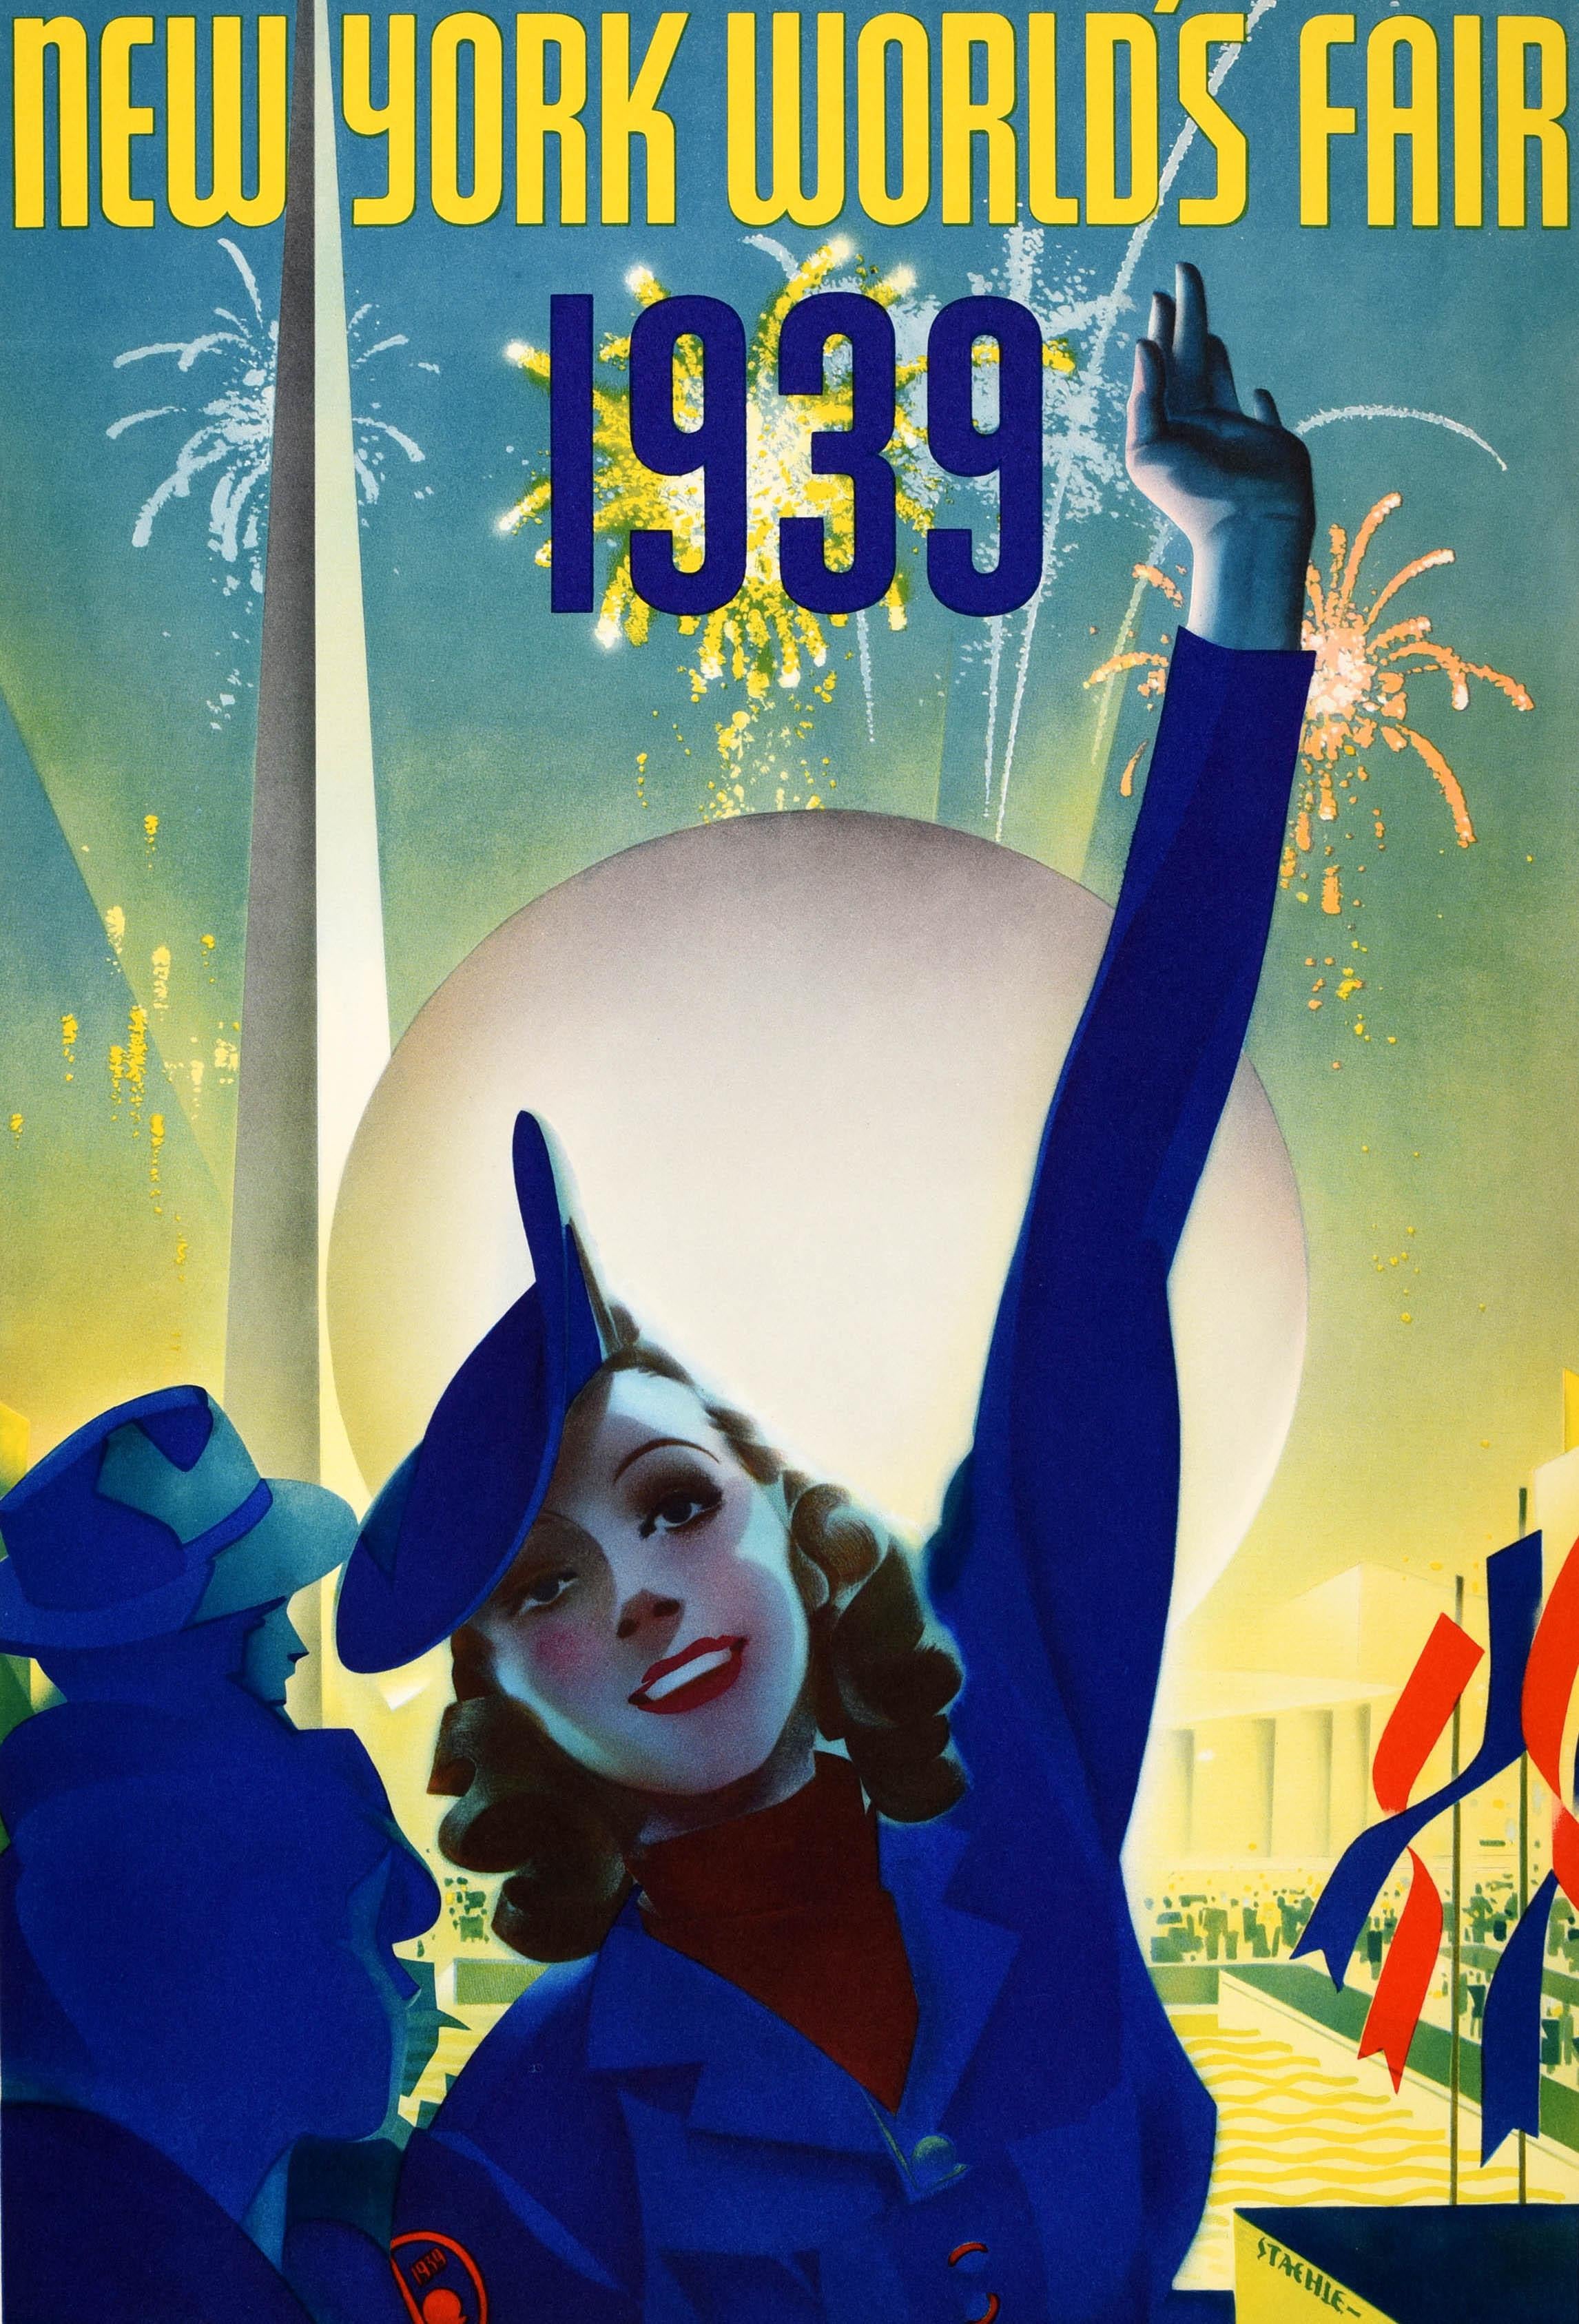 Original Vintage Poster New York World Fair 1939 Fireworks Art Deco Staehle USA - Print by Albert Staehle